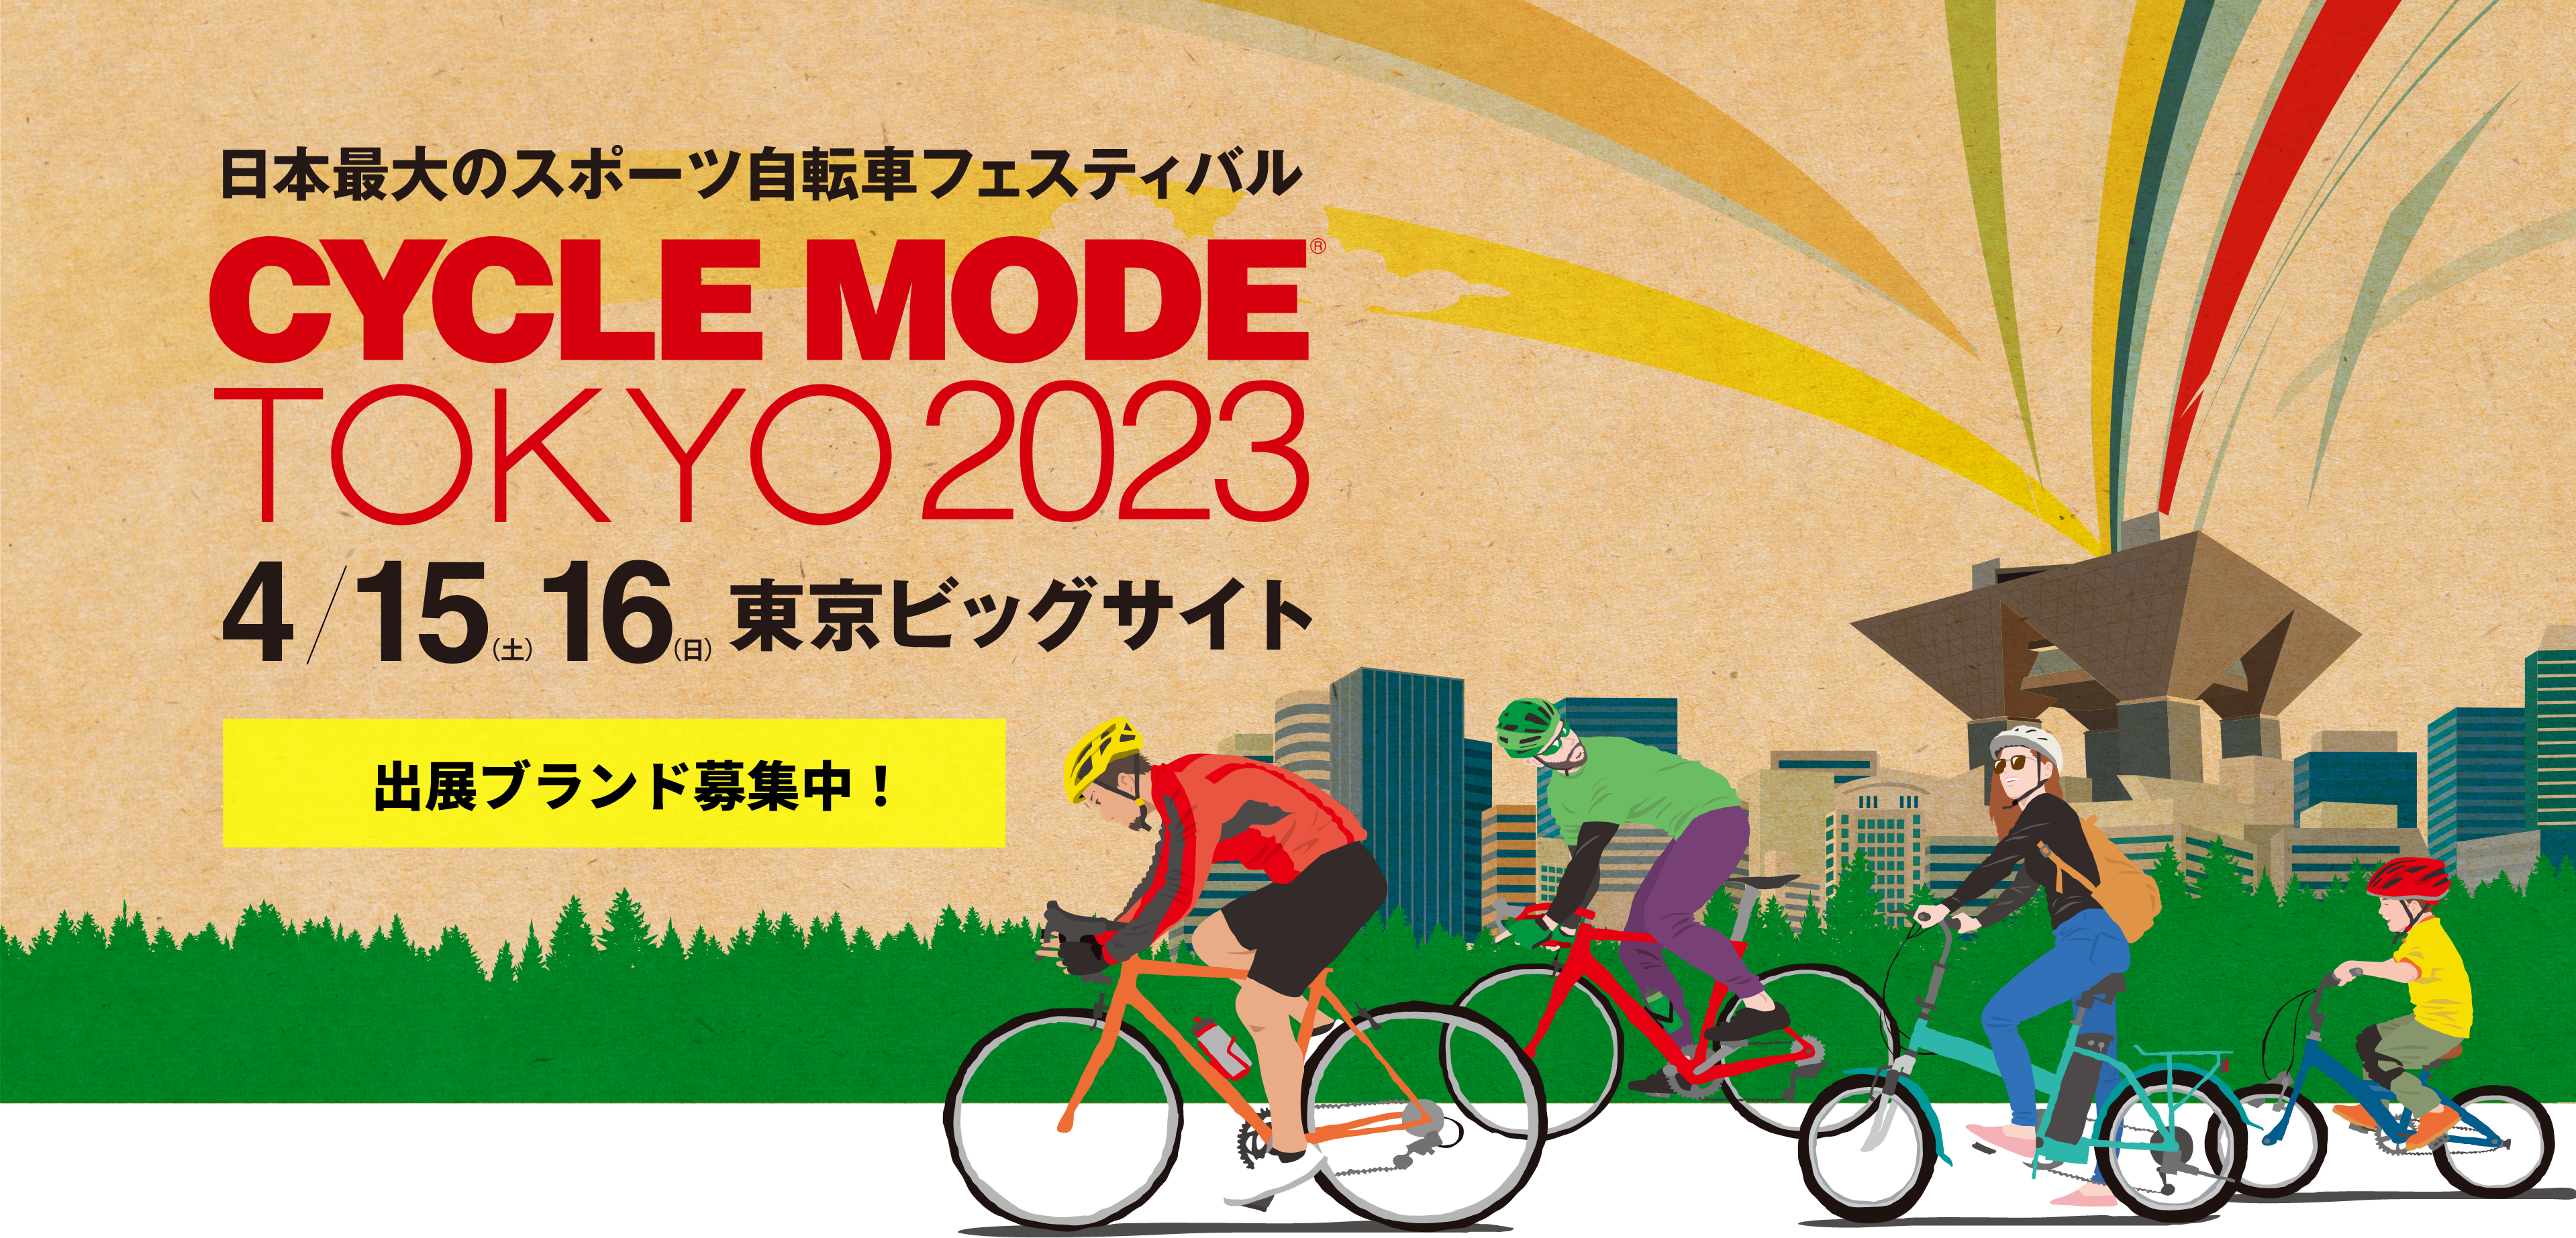 CYCLEMODE TOKYO 2023